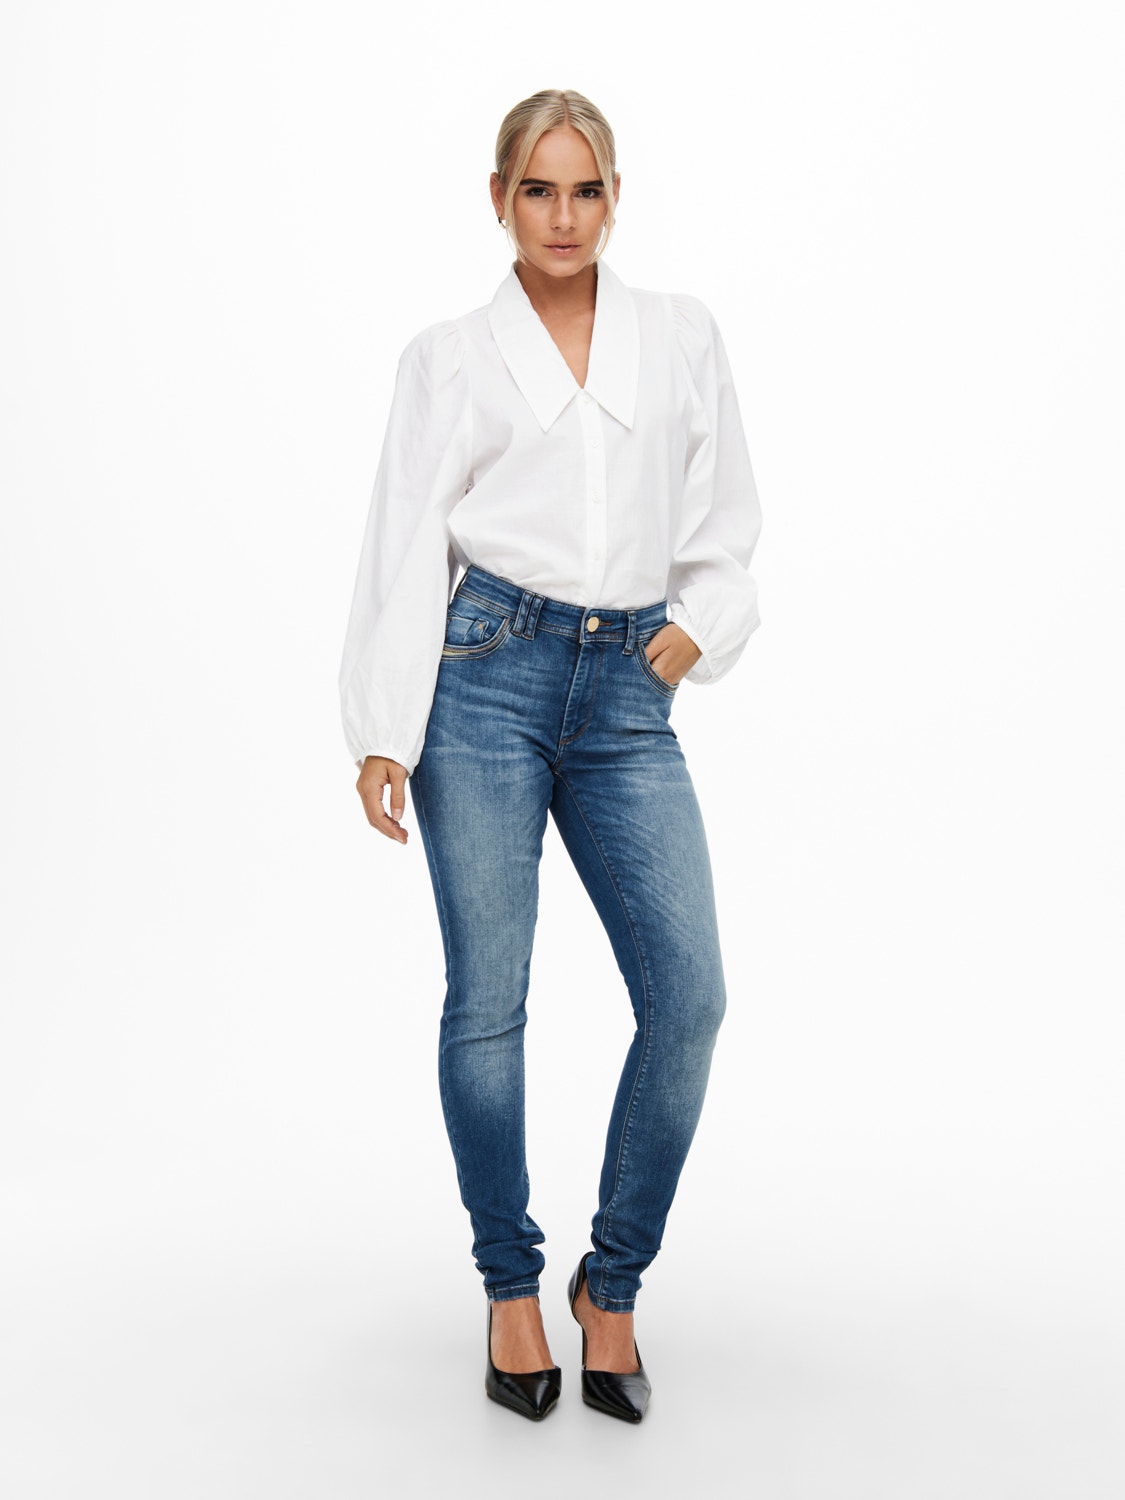 ONLY Skinny Fit Mid waist Jeans -Medium Blue Denim - 15245452